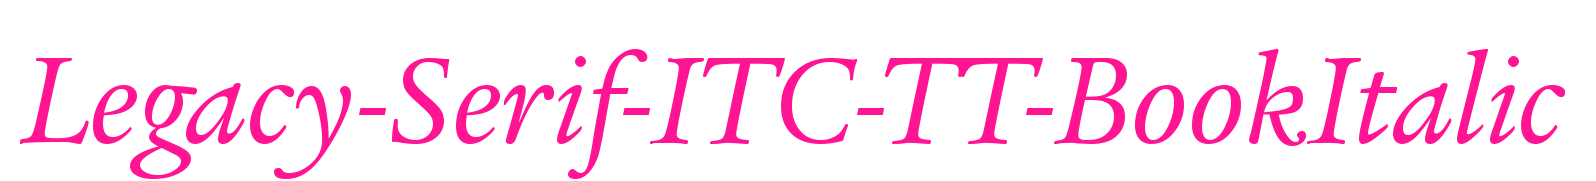 Legacy-Serif-ITC-TT-BookItalic预览图片